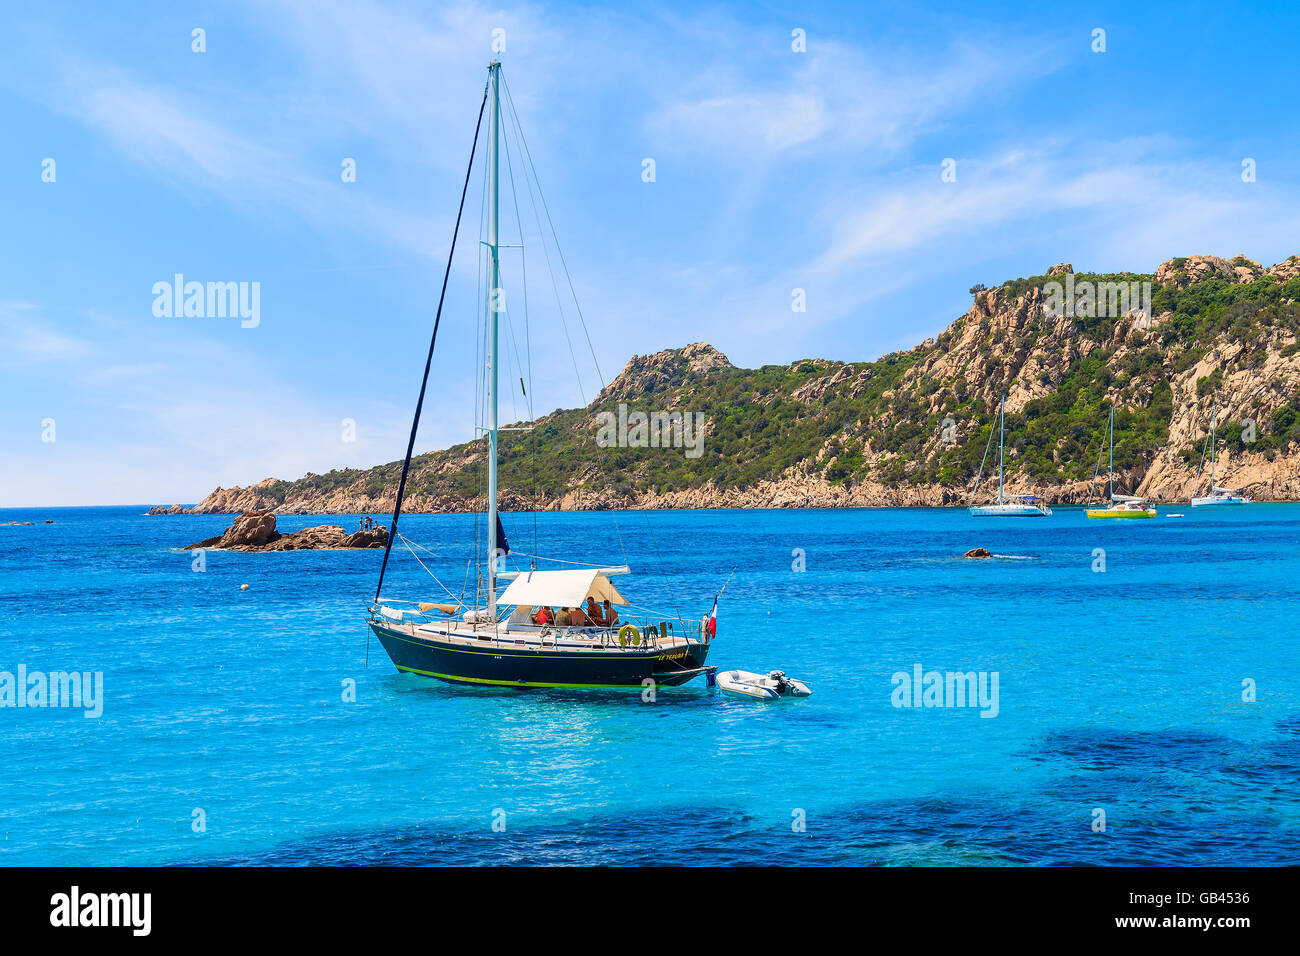 CORSICA ISLAND, FRANCE - JUN 24, 2015: A sailing boat on blue sea mooring in a bay on coast of Corsica island, France. Stock Photo